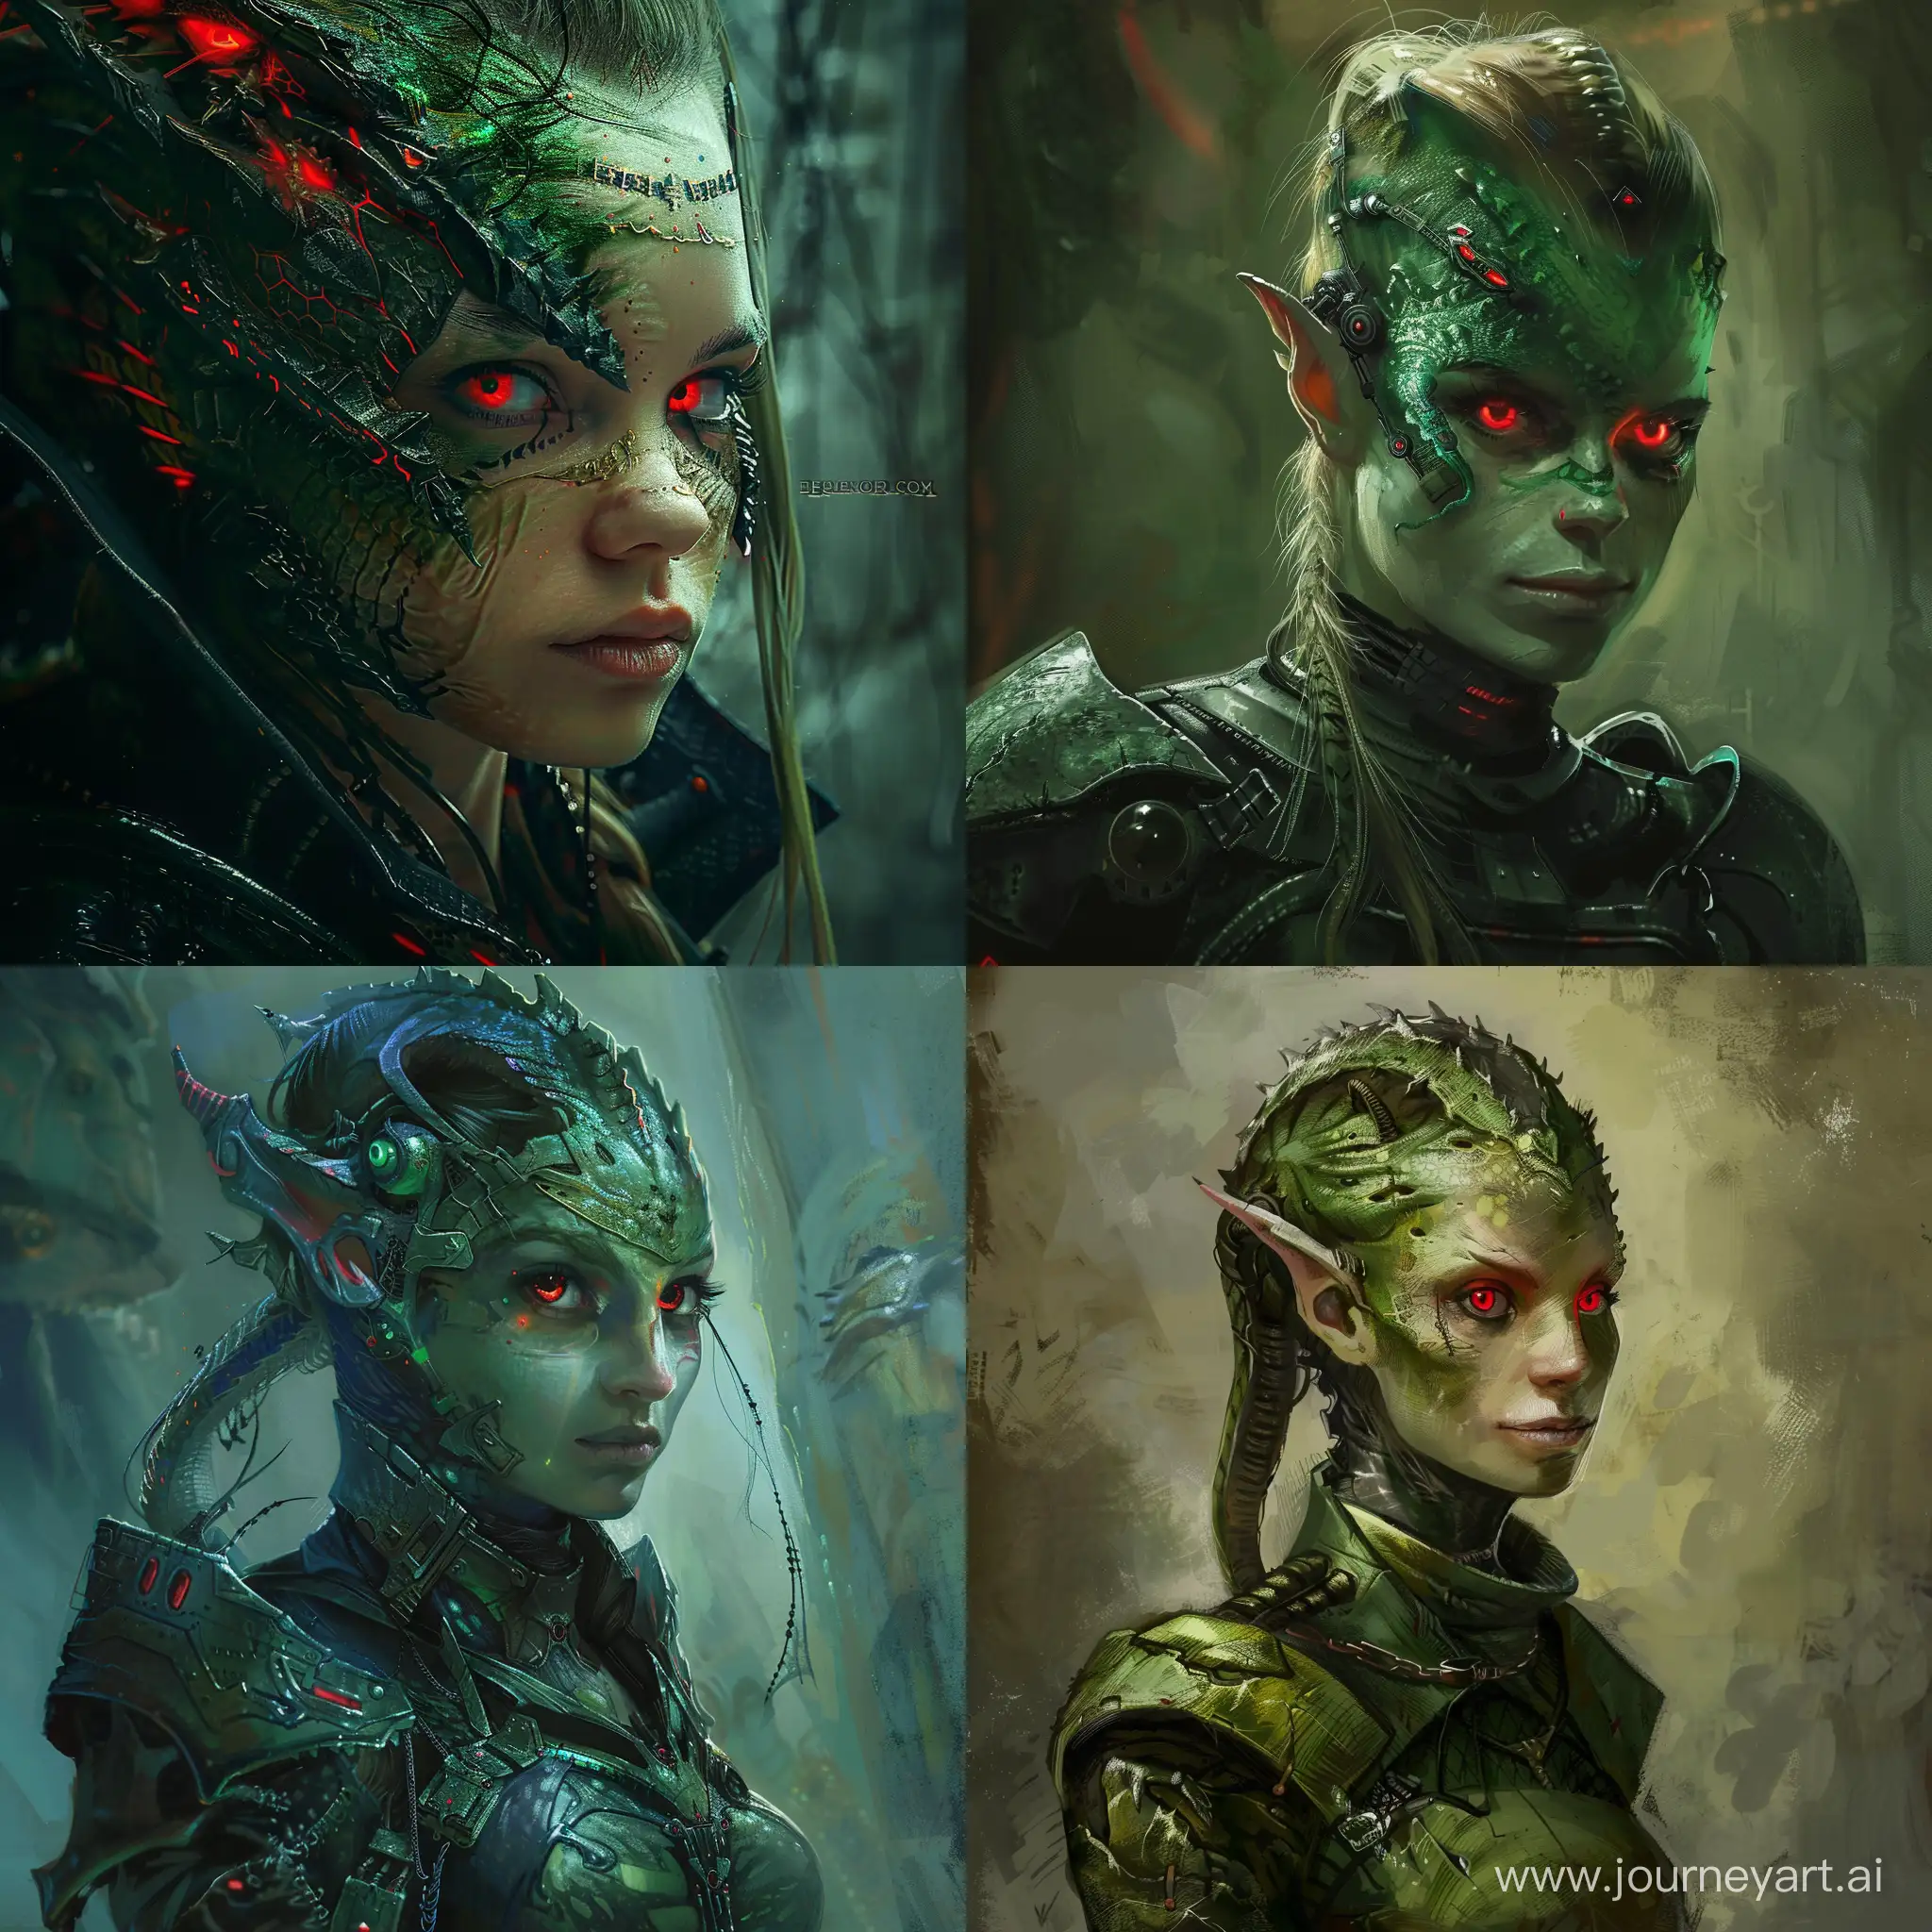 Enigmatic-Technomancer-Dragonborn-Woman-with-Emerald-Skin-and-Fiery-Gaze